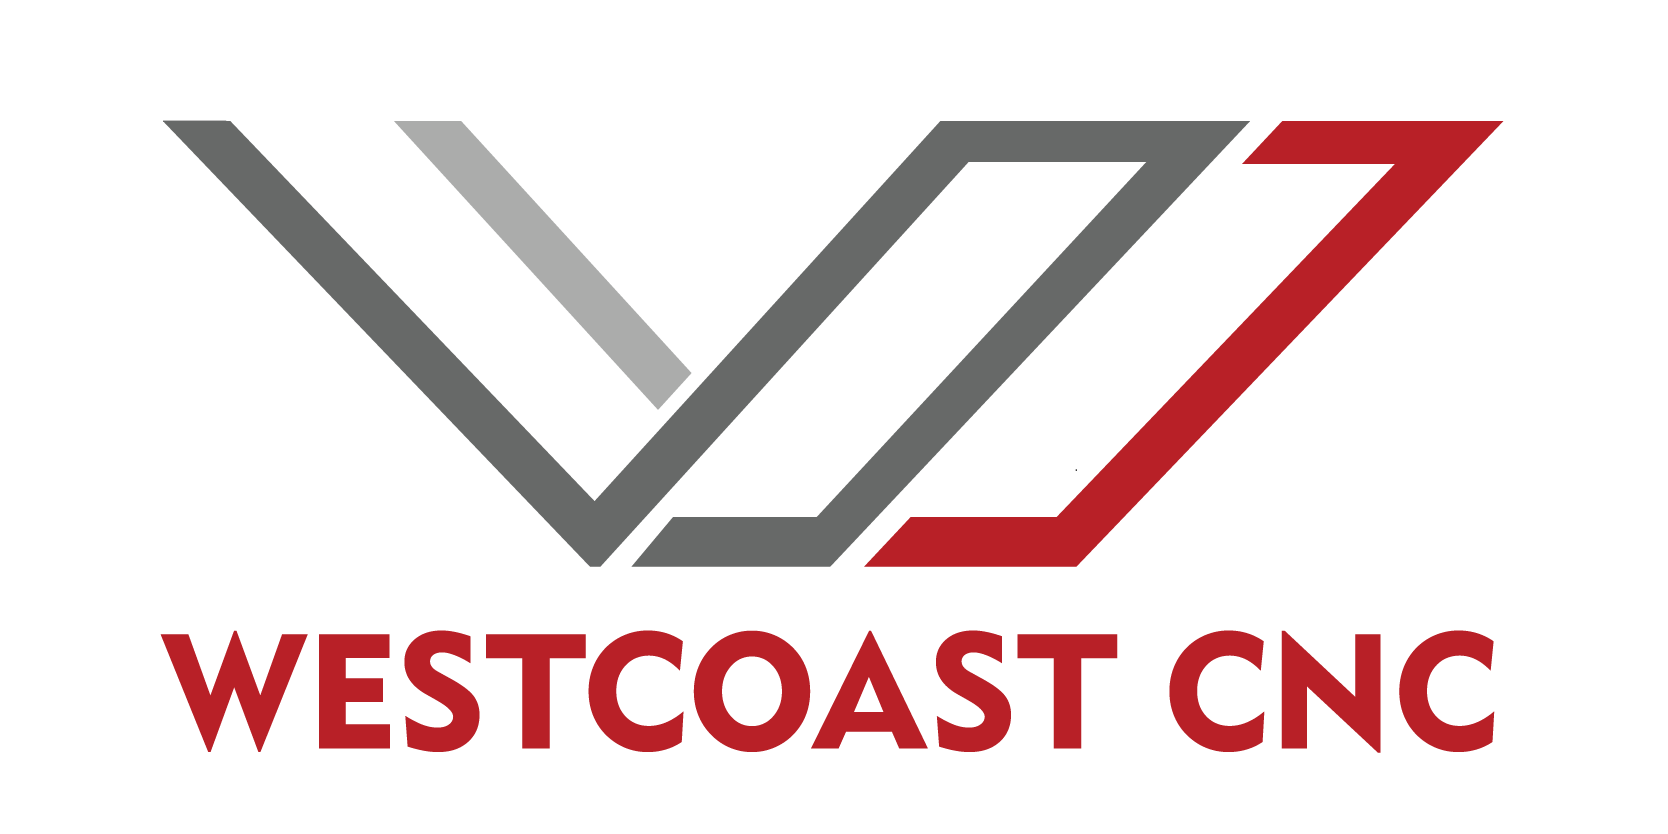 WestCoast CNC - Your Full Service CNC Shop - (778) 999-7446